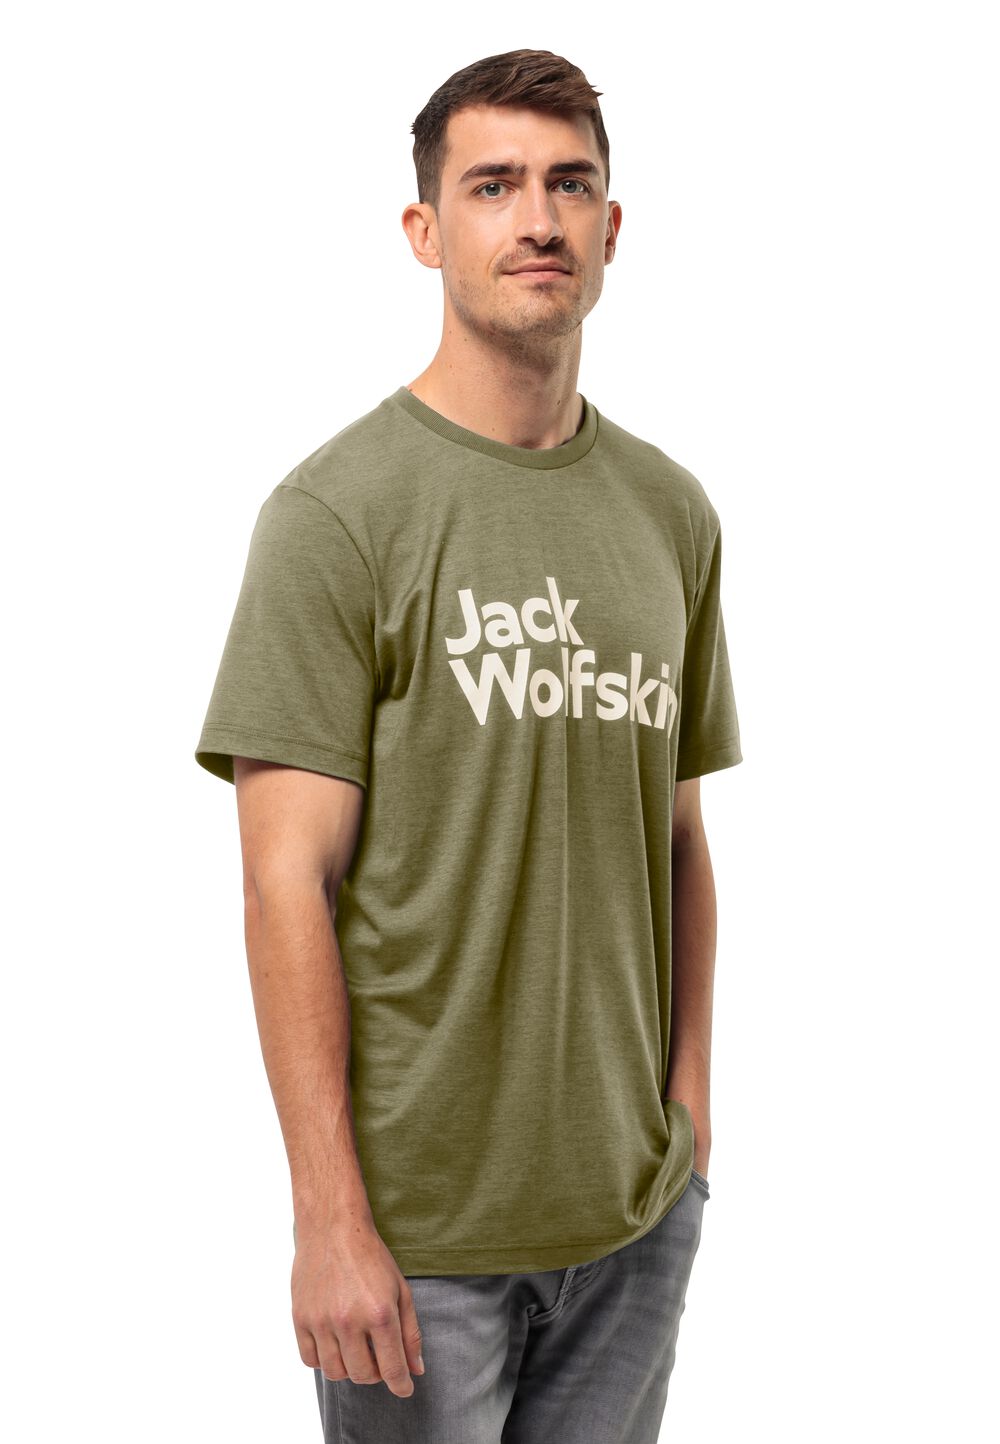 Jack Wolfskin Brand T-Shirt Men Functioneel shirt Heren 3XL bruin bay leaf